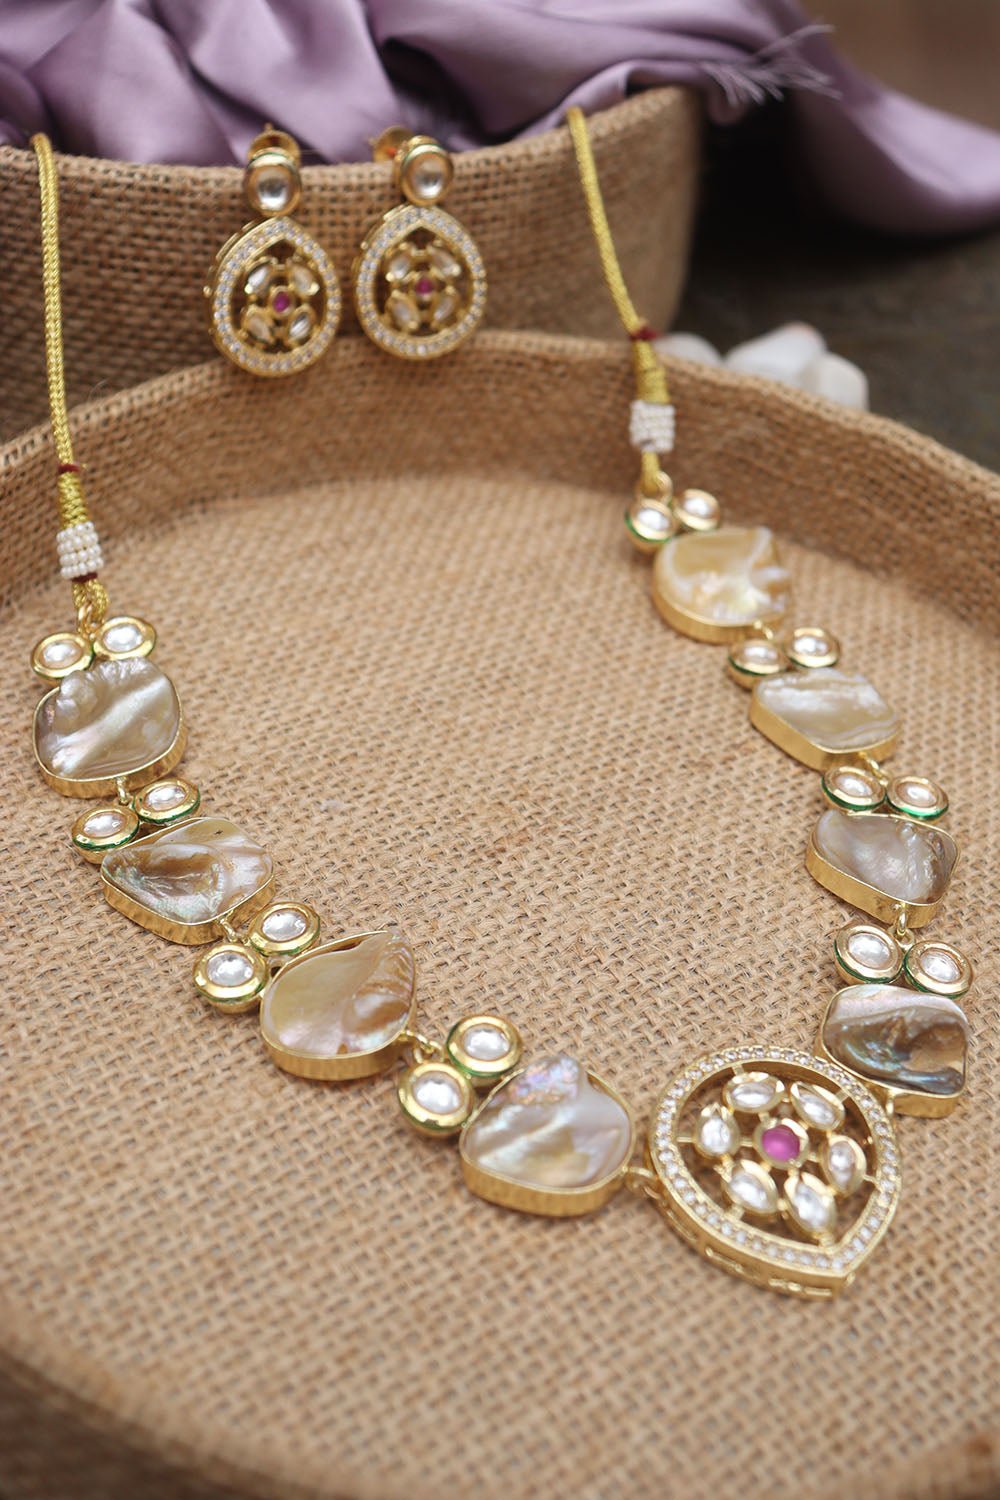 Shop Luxurionworld's Exclusive Necklace Set for a Graceful Look